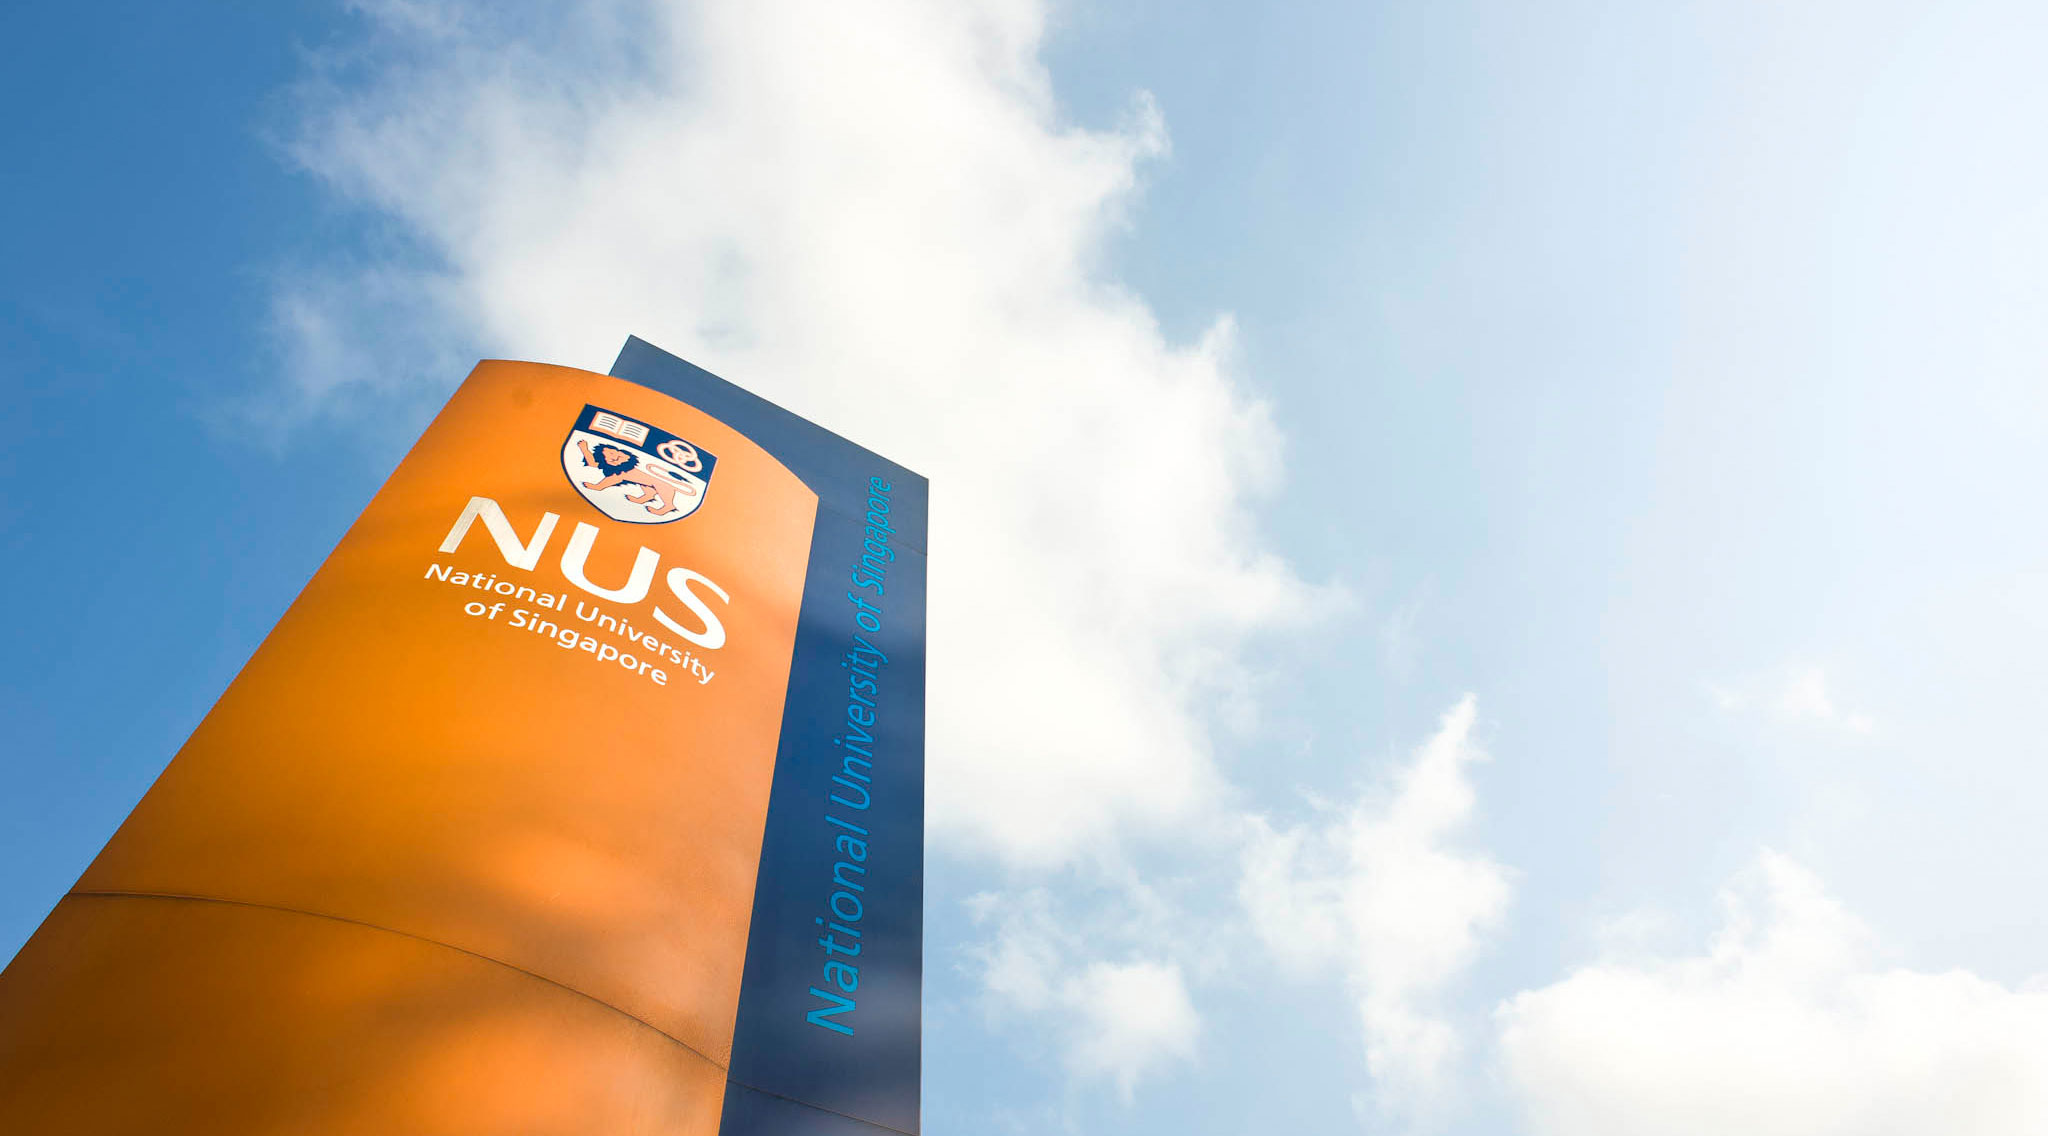 NUS tops Asia in latest QS World University Rankings